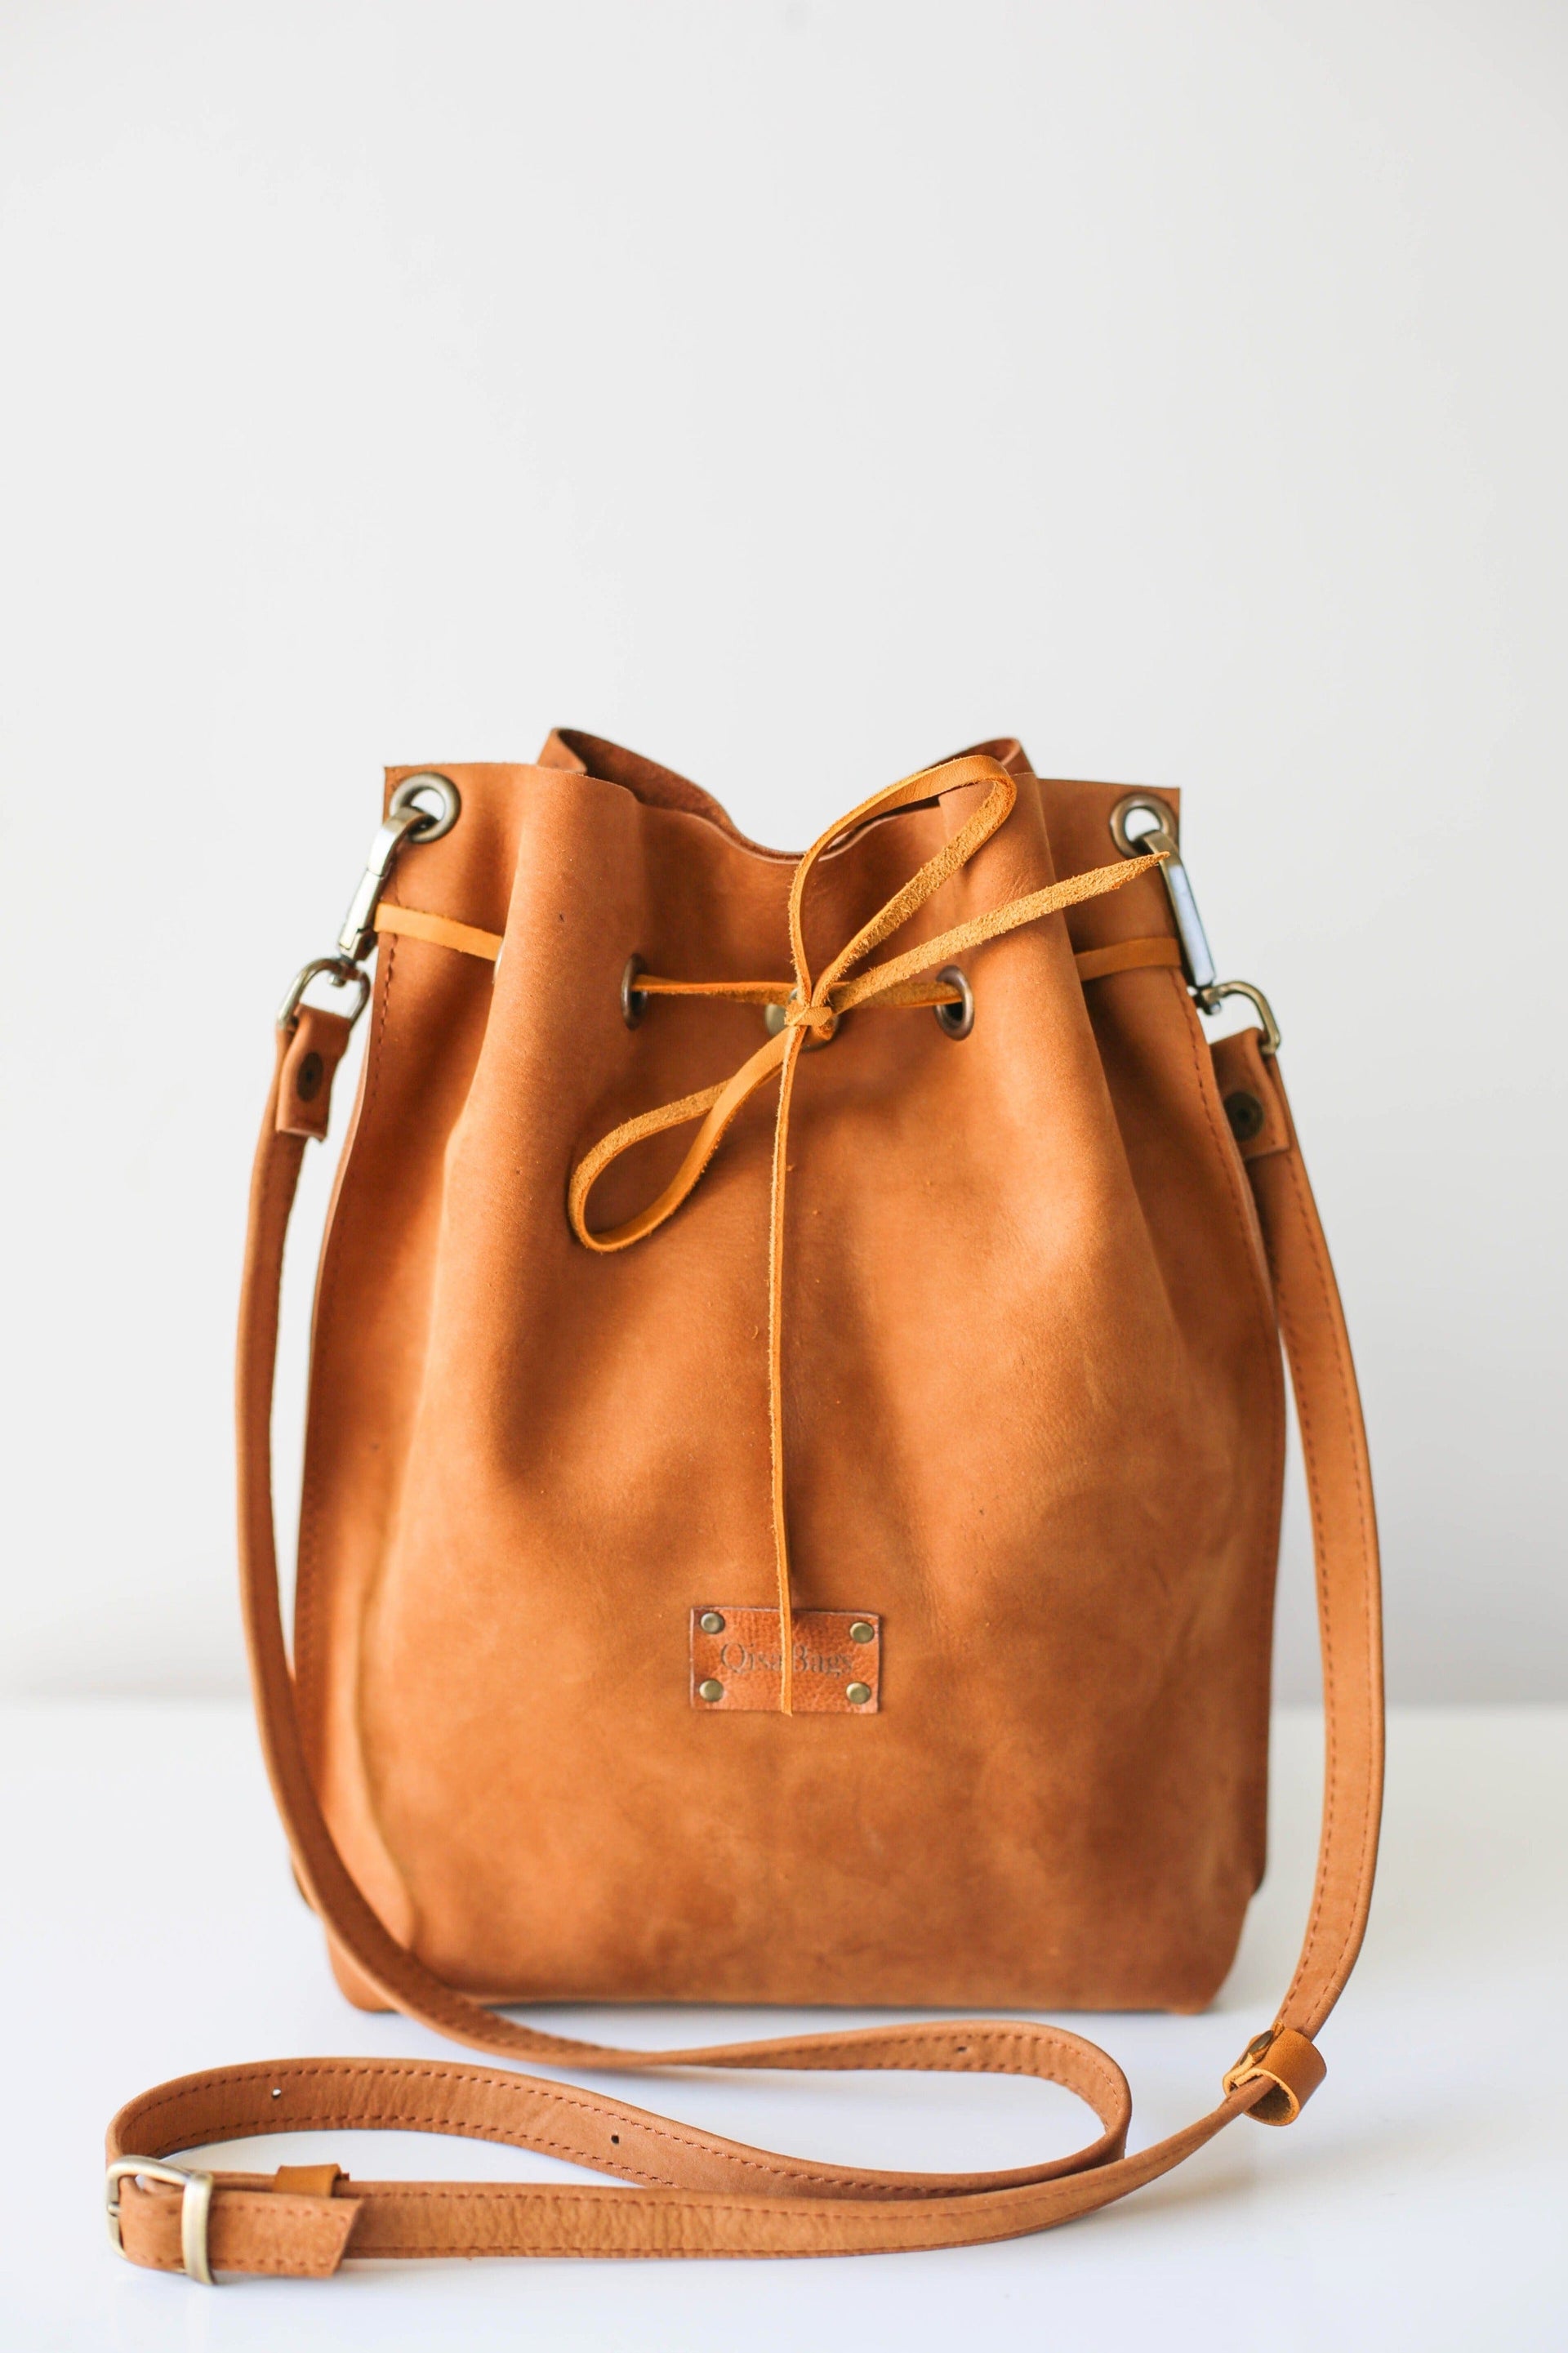 Brown leather cross body bag